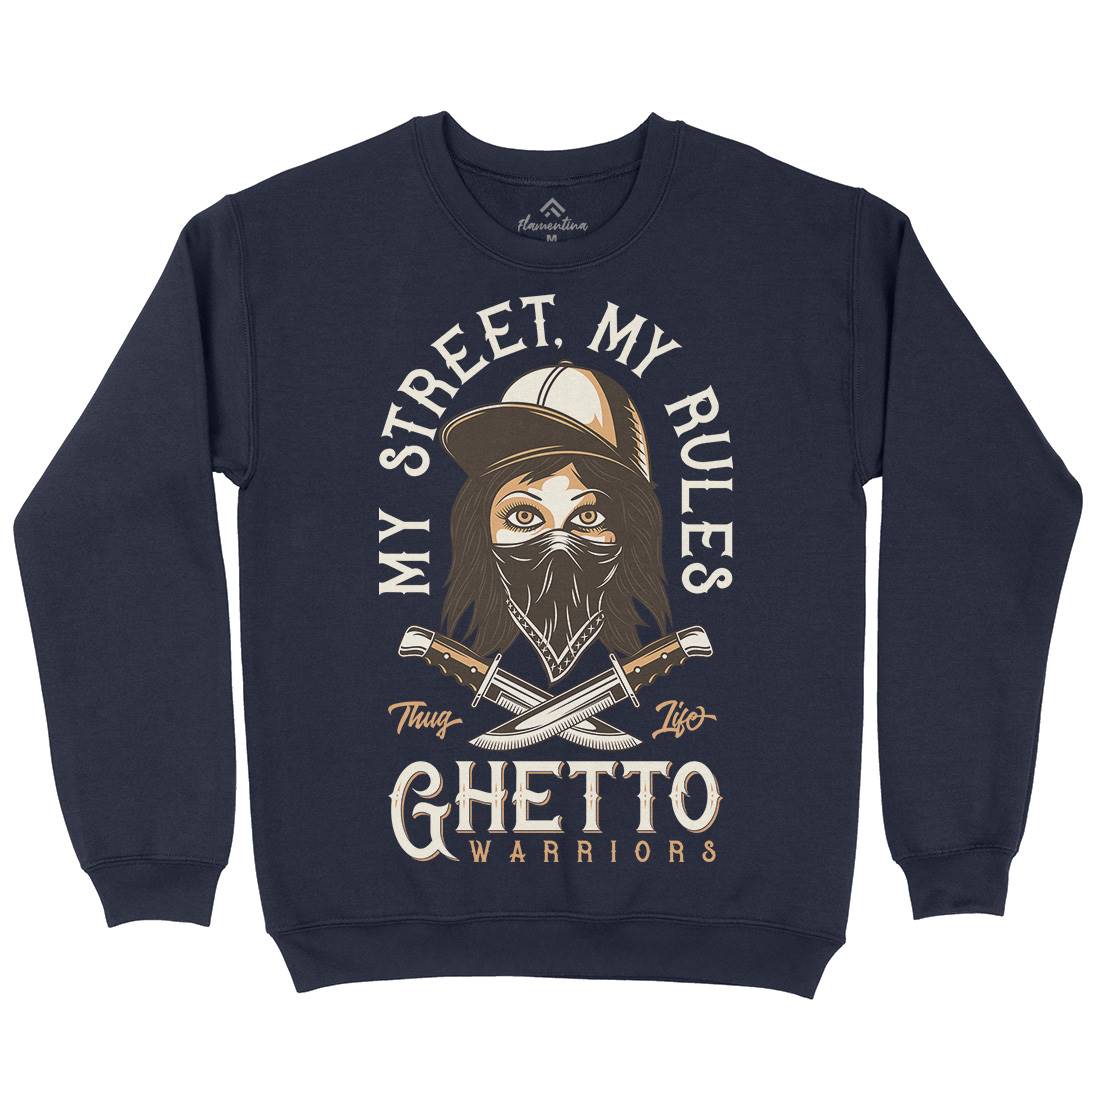 Ghetto Warriors Kids Crew Neck Sweatshirt Retro D938